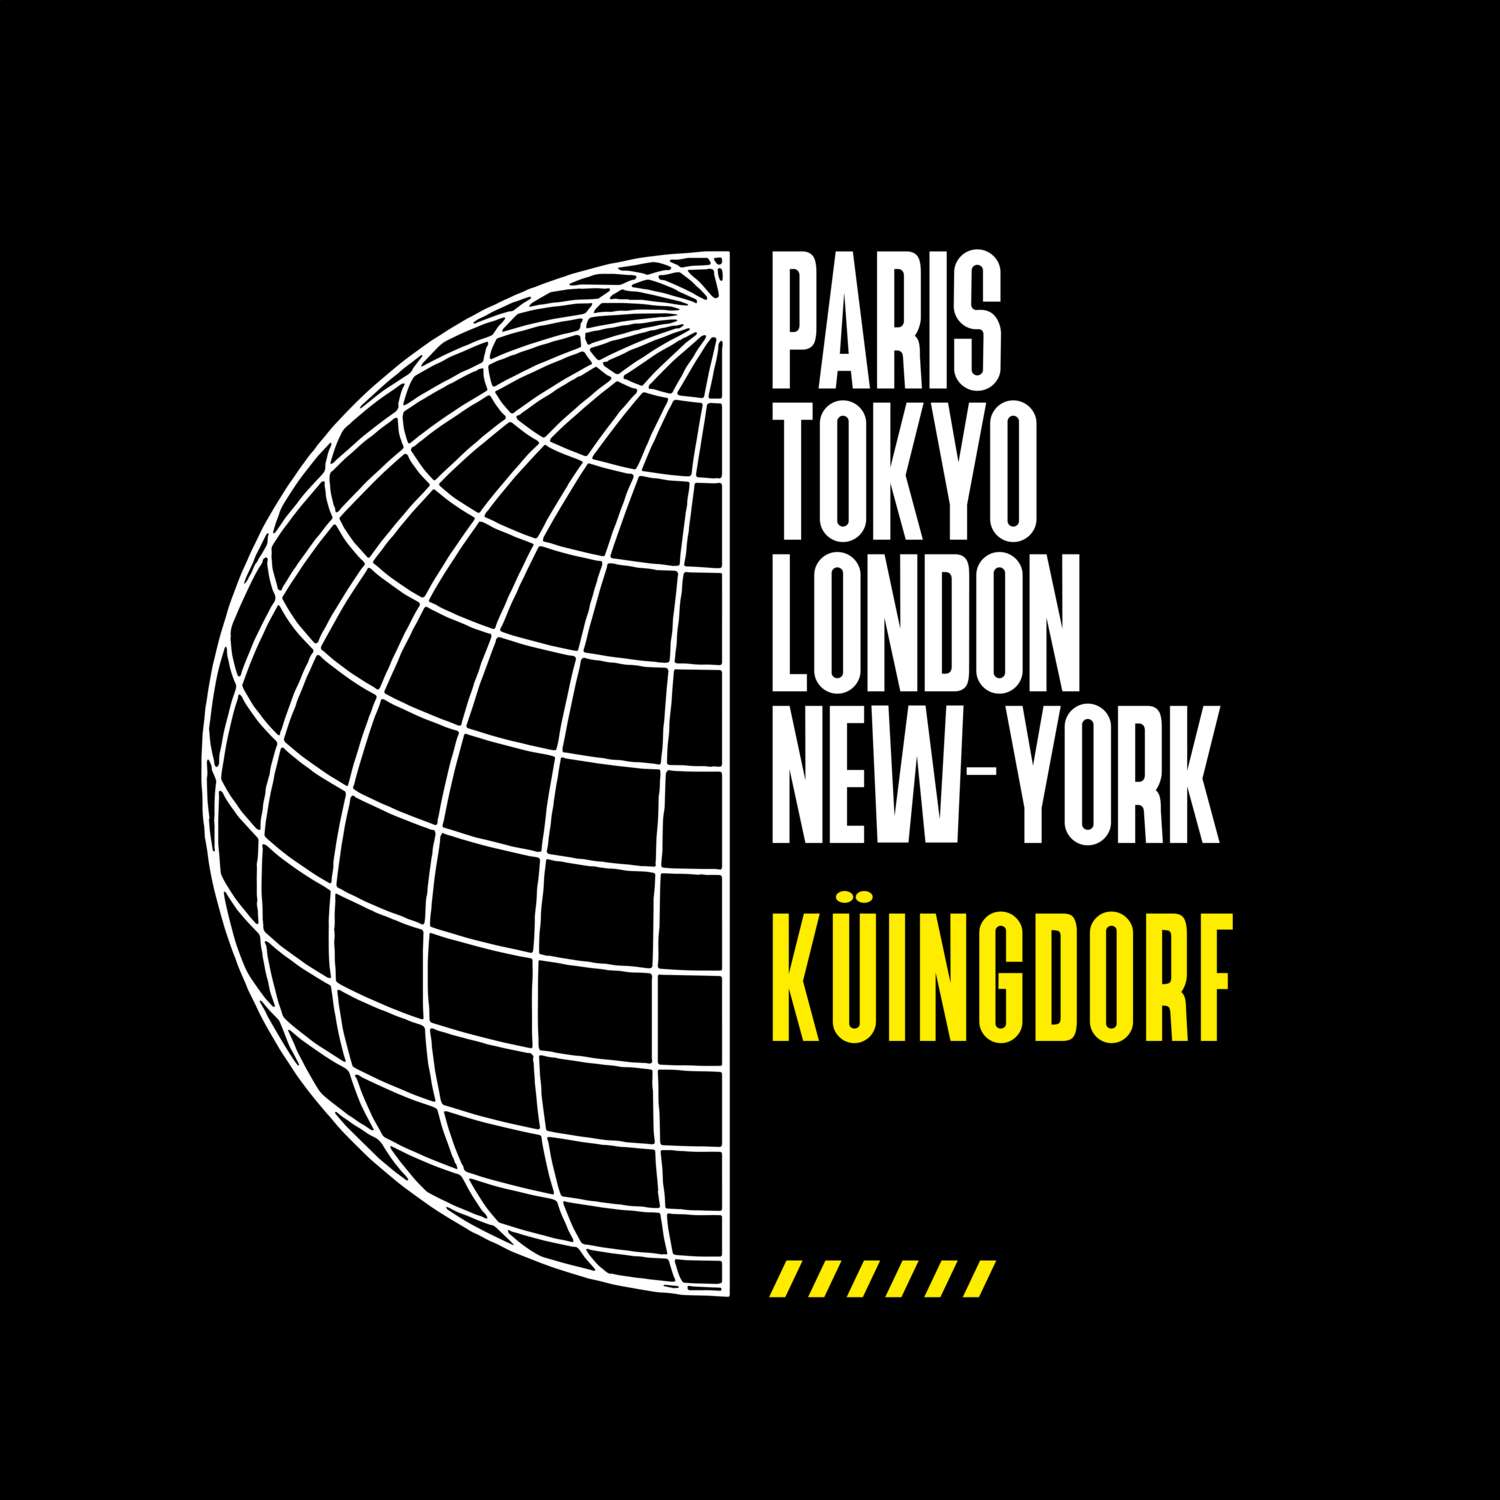 Küingdorf T-Shirt »Paris Tokyo London«